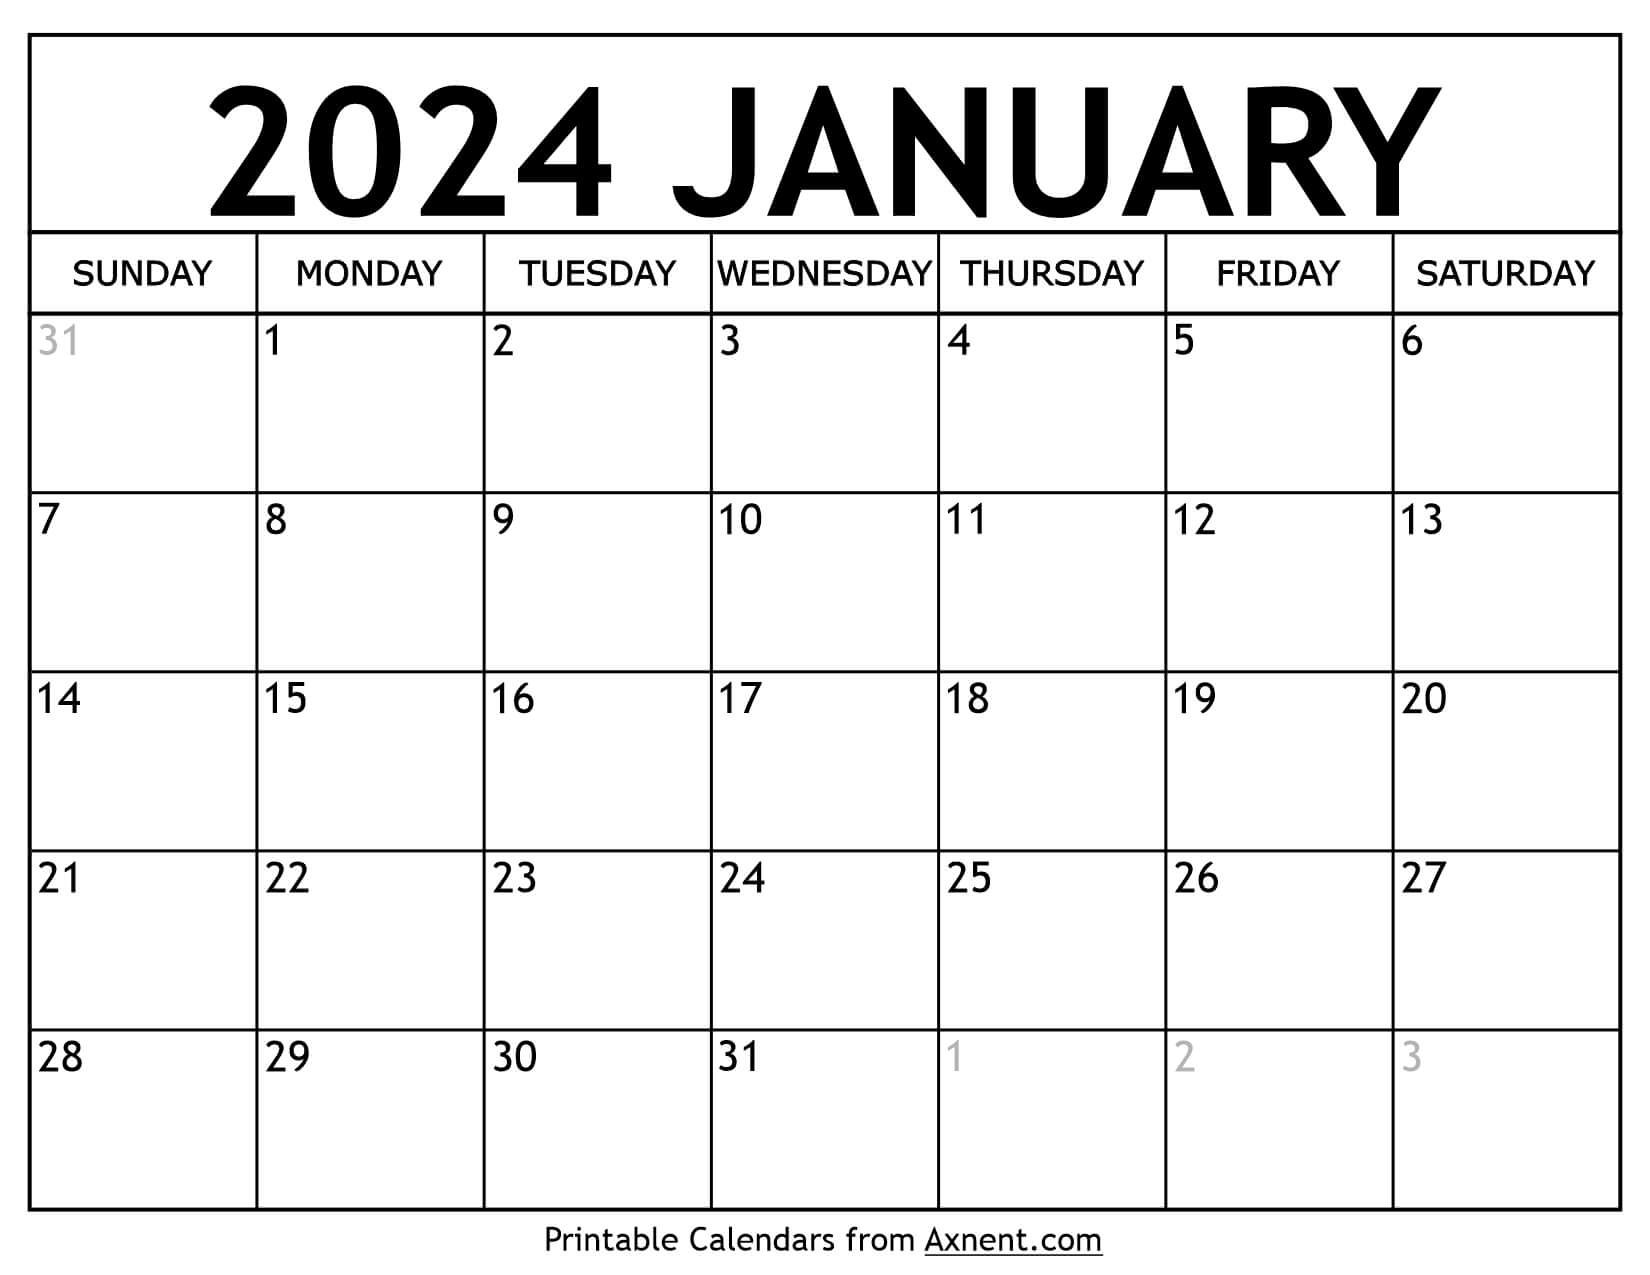 Printable January 2024 Calendar Template - Print Now for Blank Calendar January 2024 Free Printable